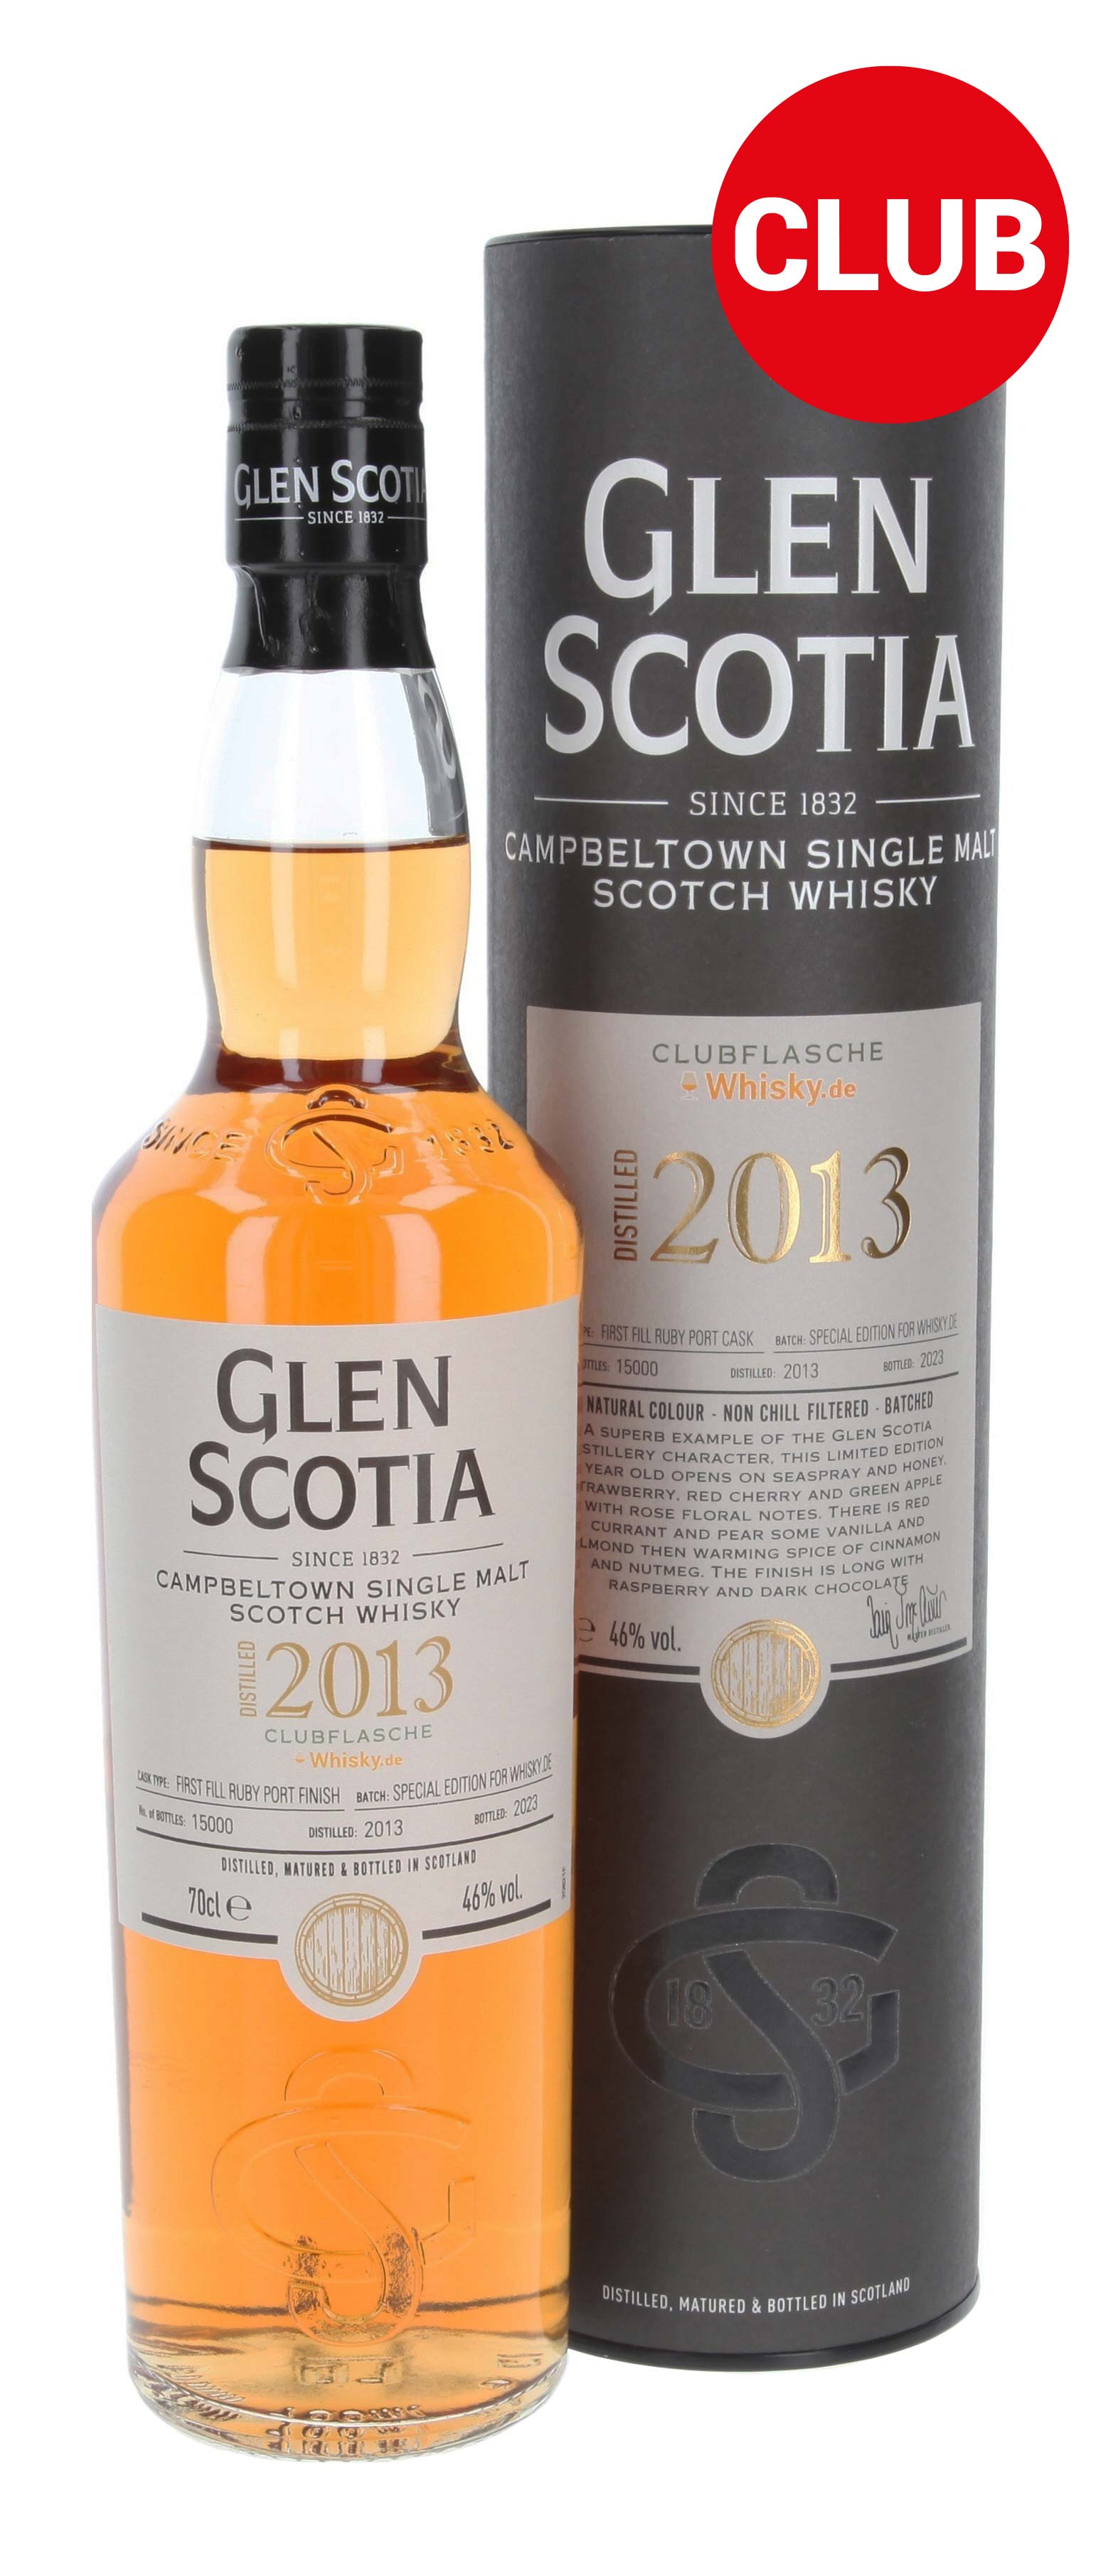  Whisky.de Clubflasche Glen Scotia